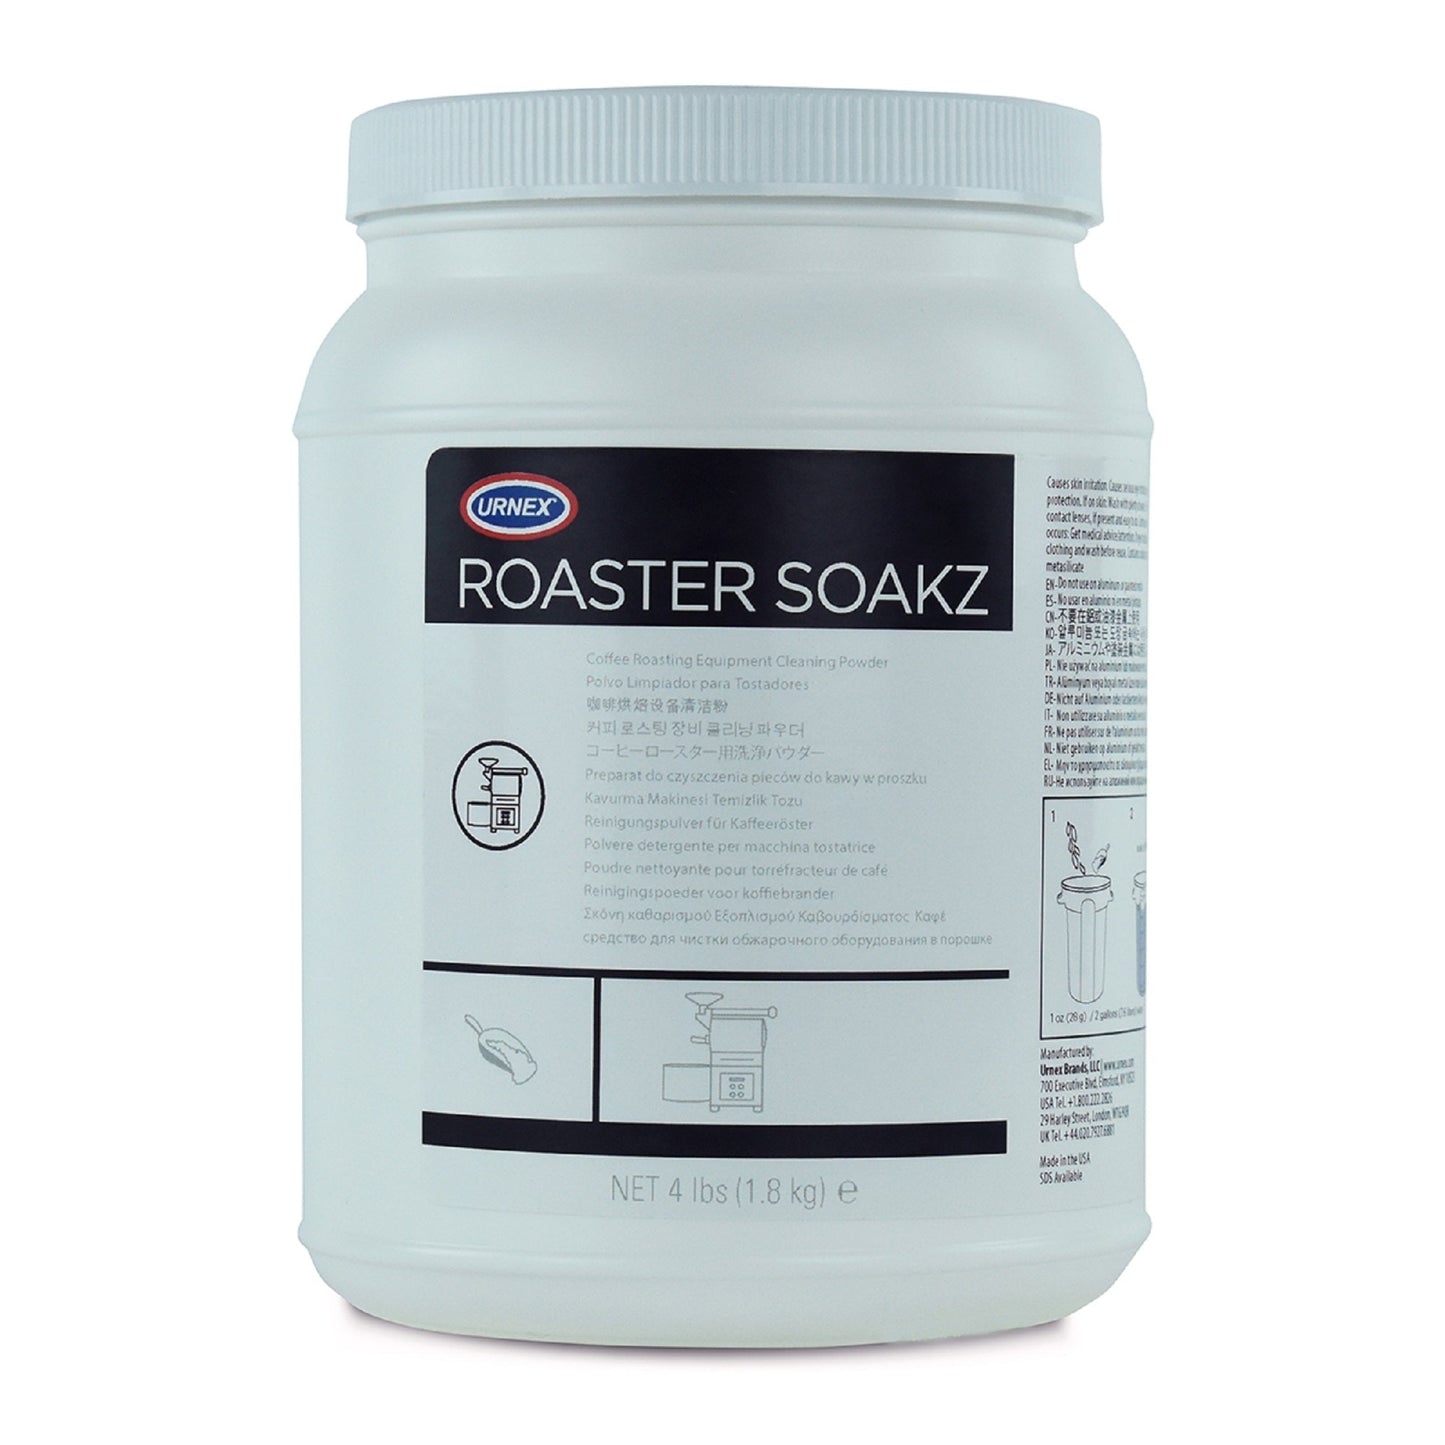 Urnex Roaster Soakz - Coffee Roasting Equipment Cleaning Powder - Velo Coffee Roasters